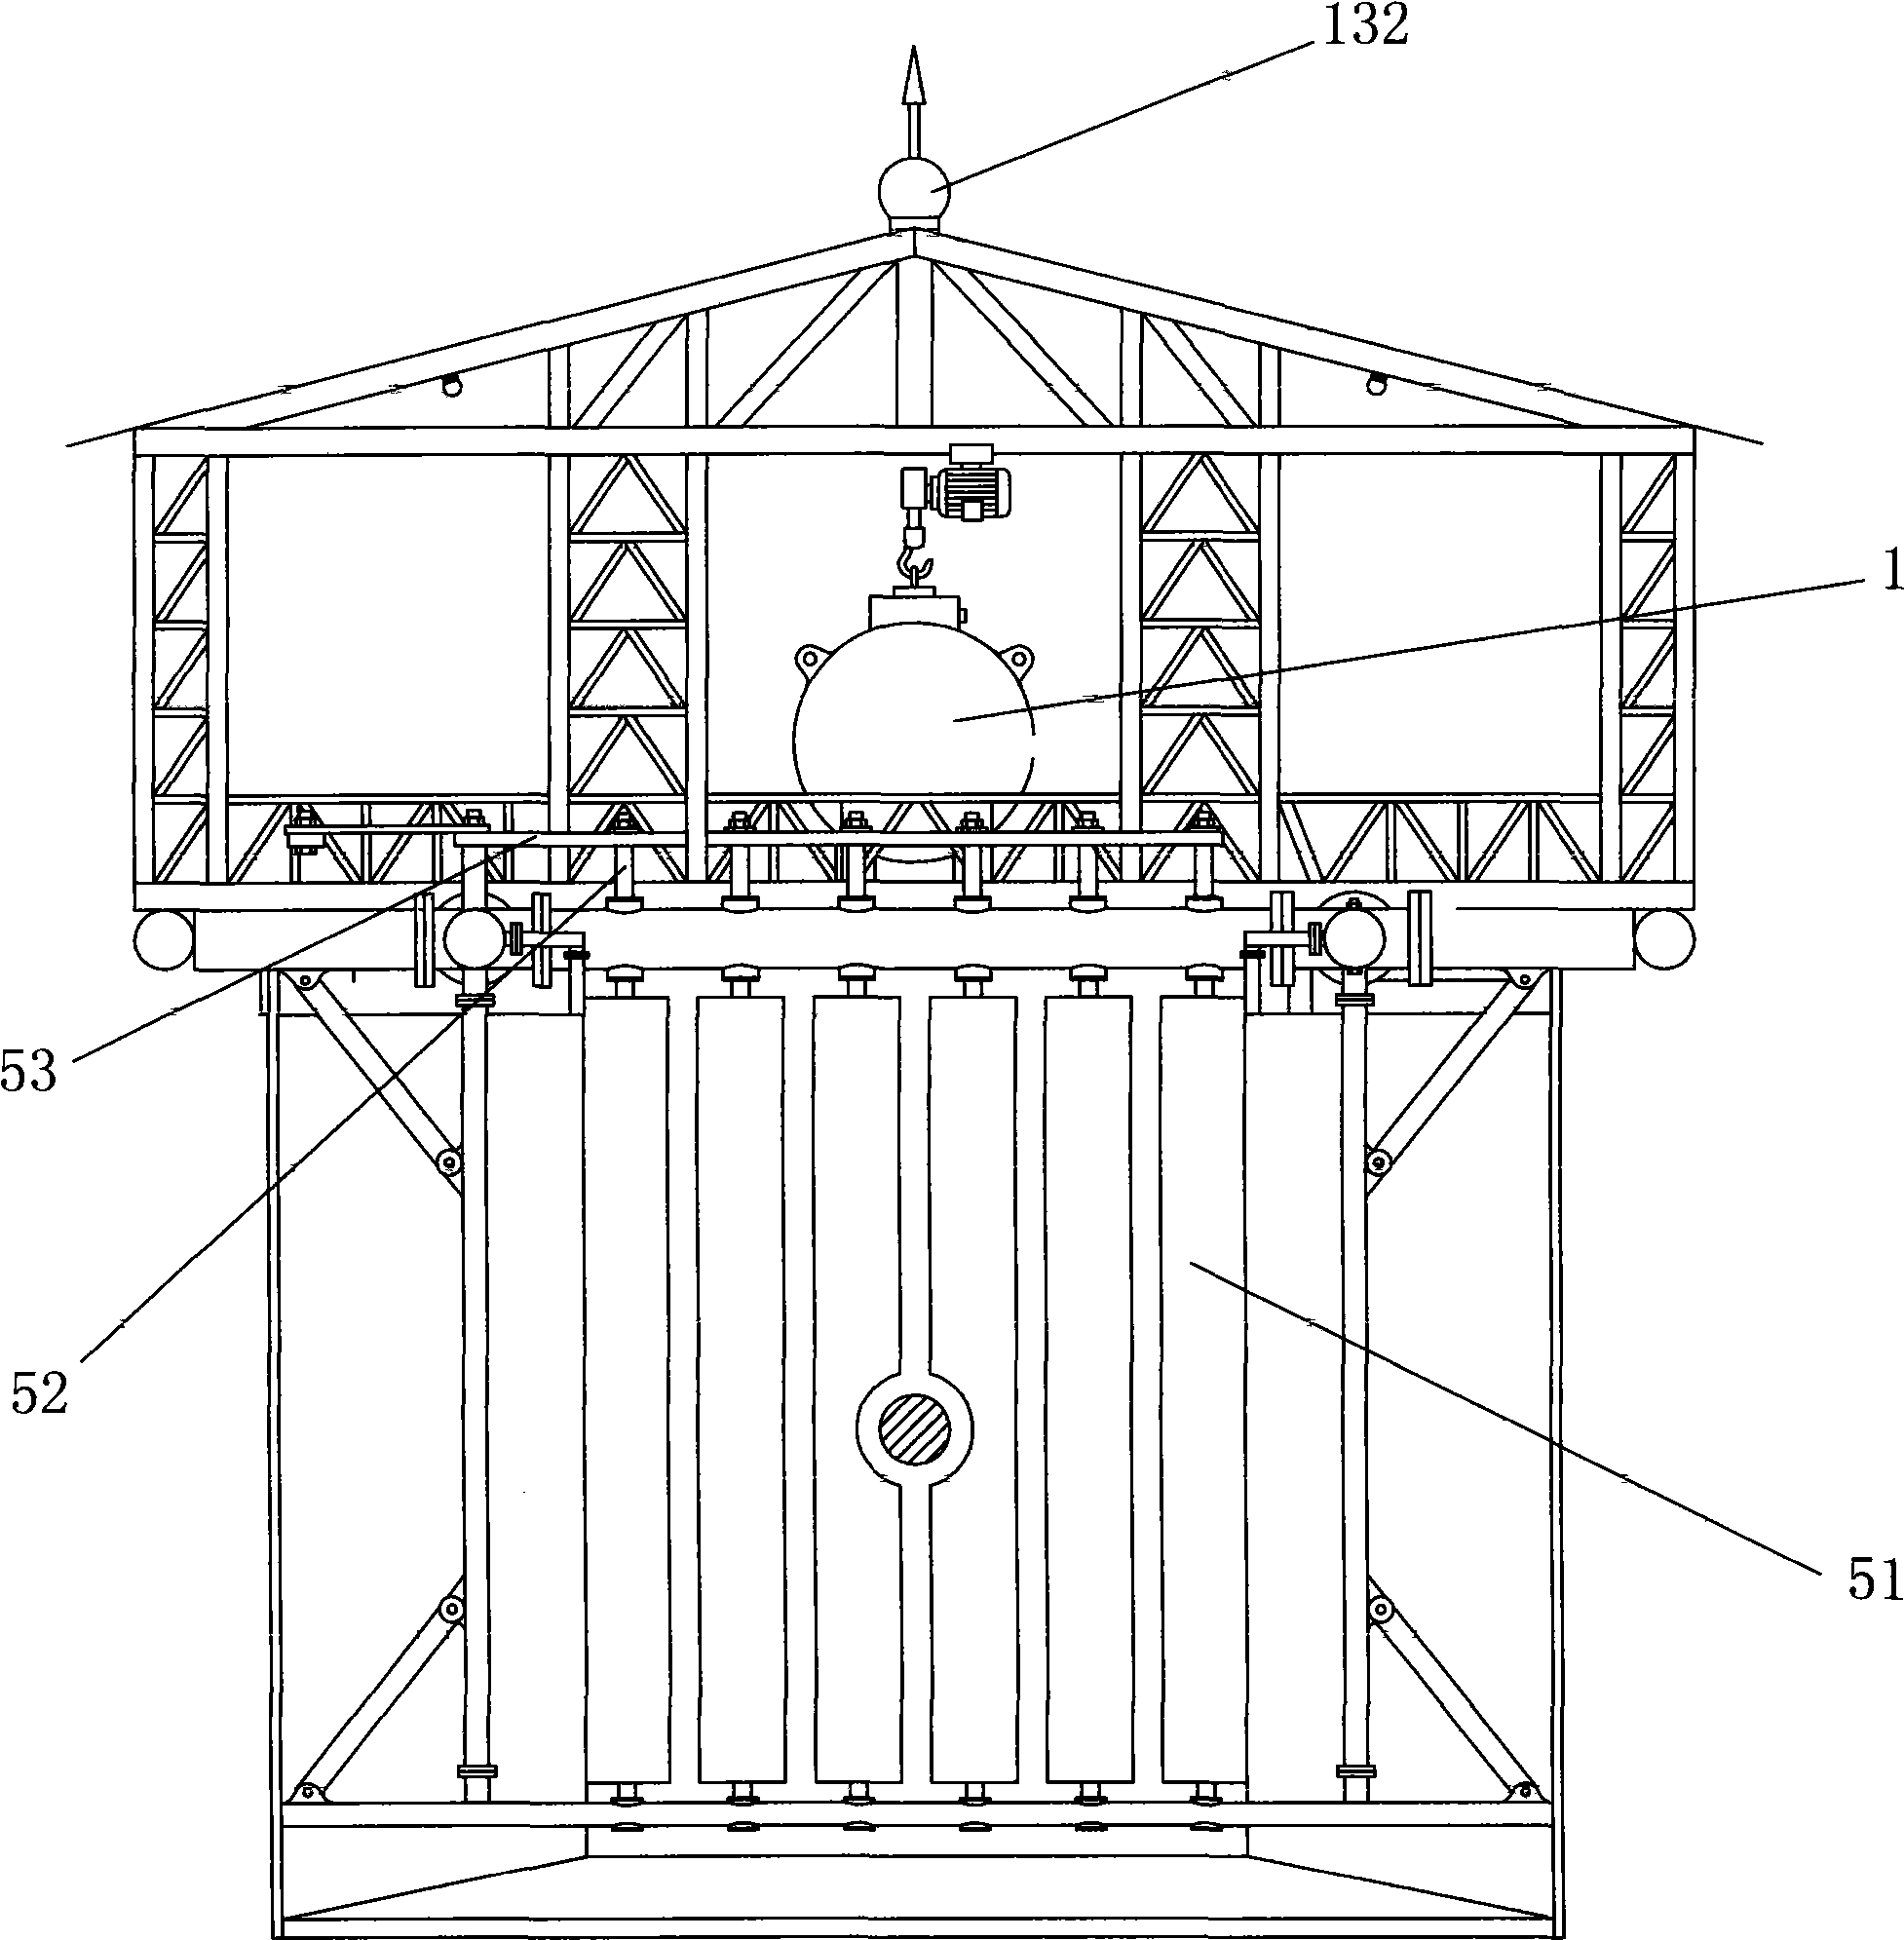 A hydro-electric generator set